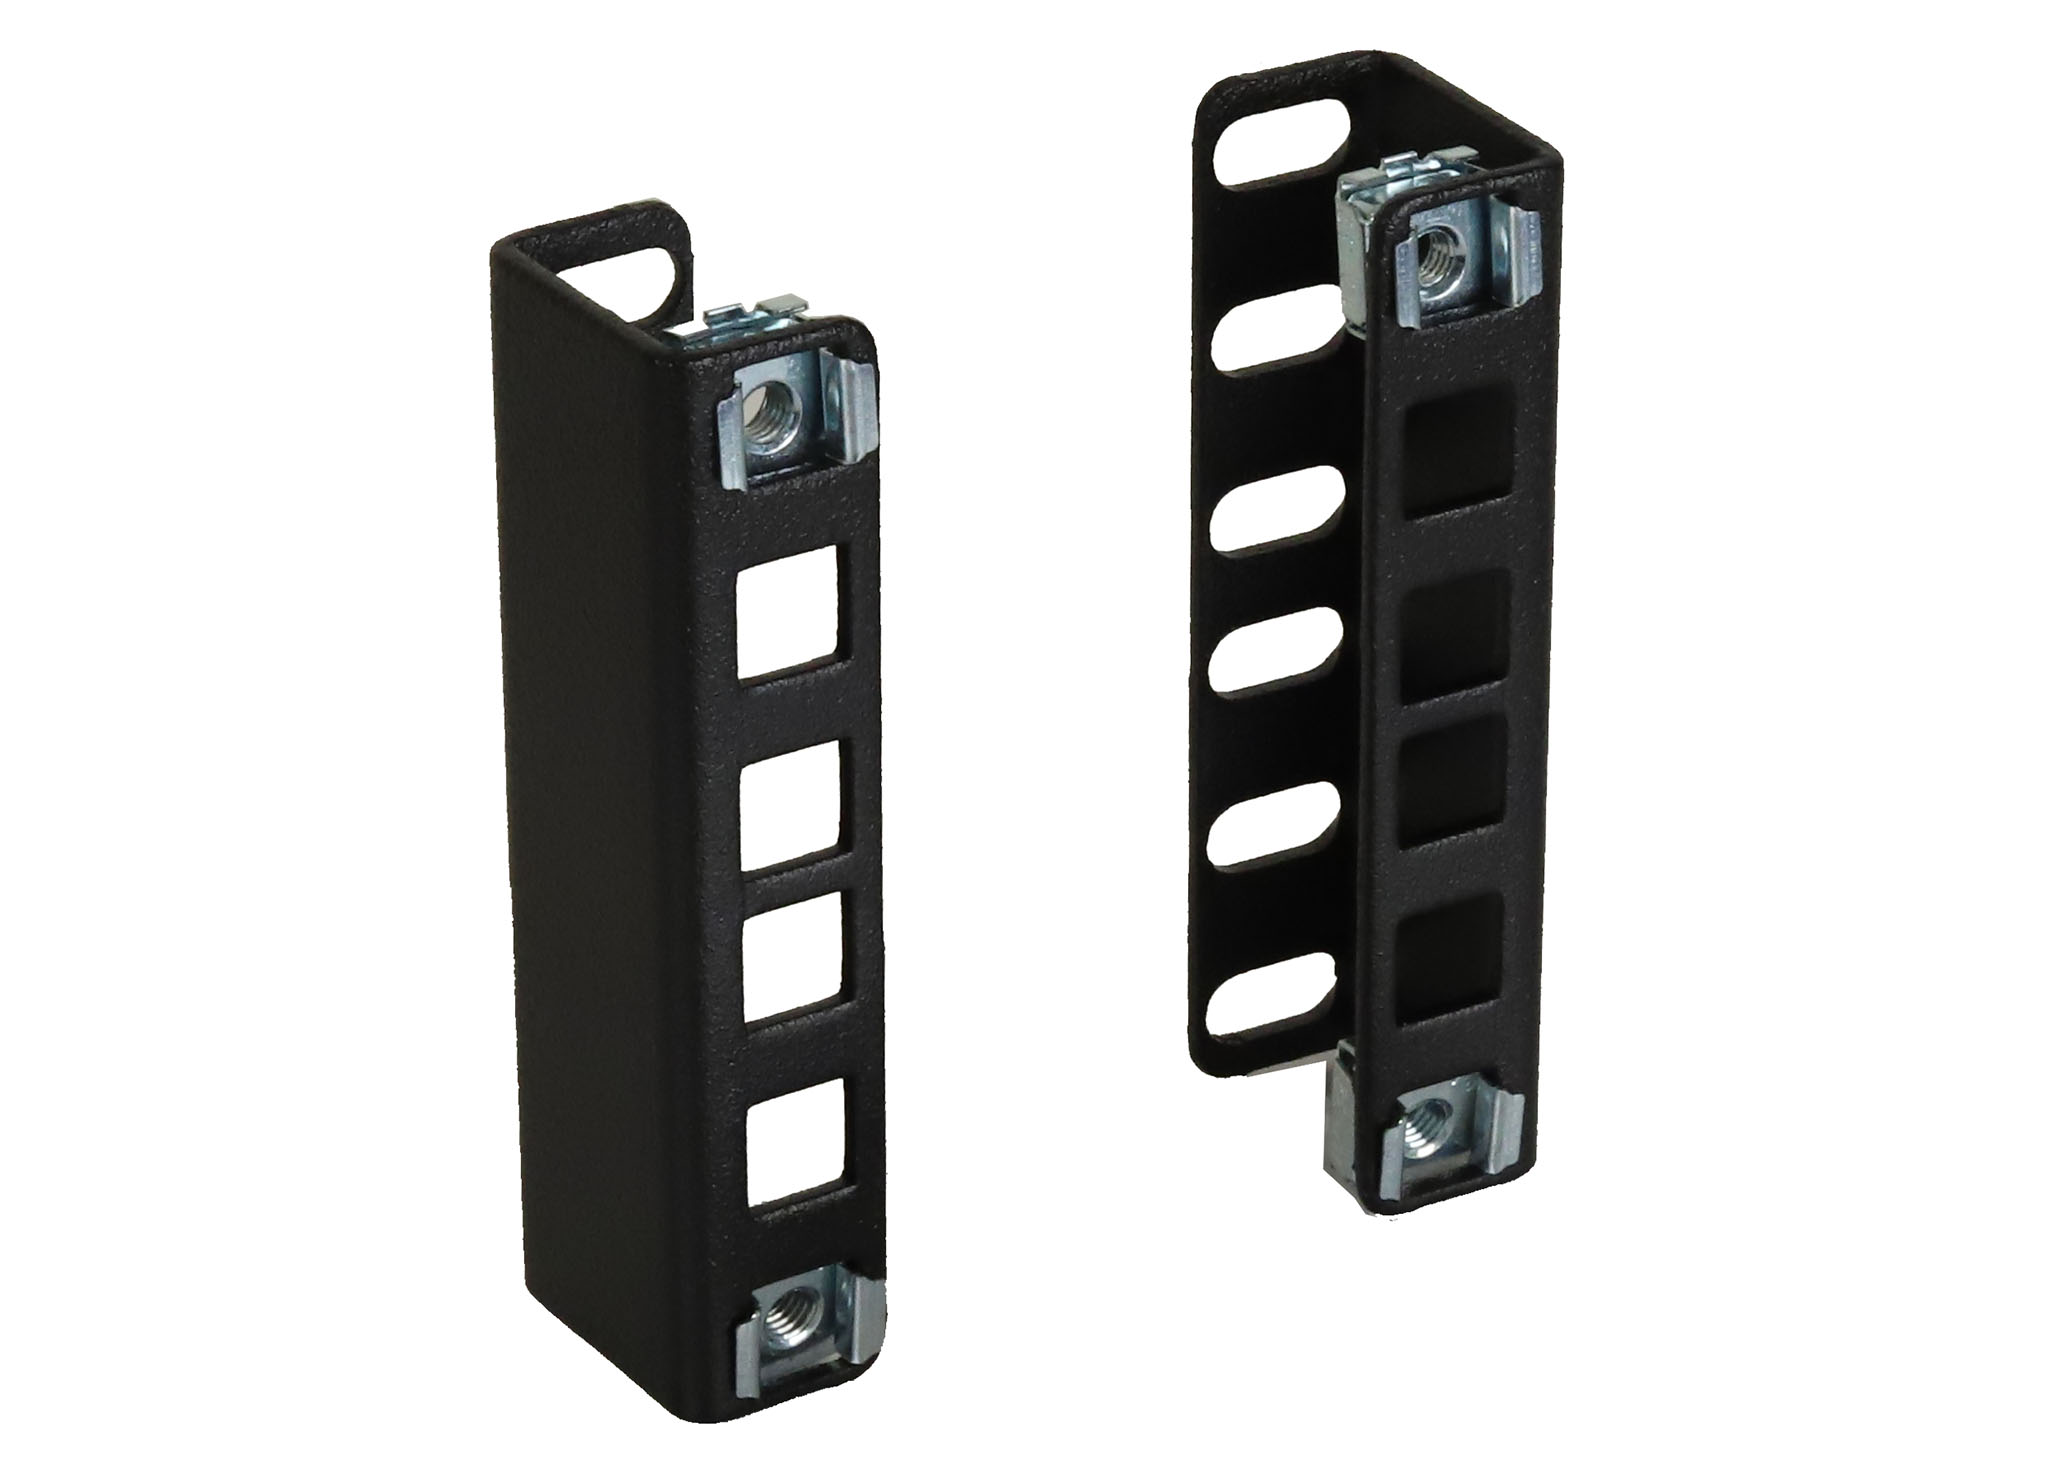 IAENCLOSURES RCB1061-2U 1U 1.1 inch rack extender brackets for EIA standard 19 inch, 23 inch and 24 inch wide rack cabinet